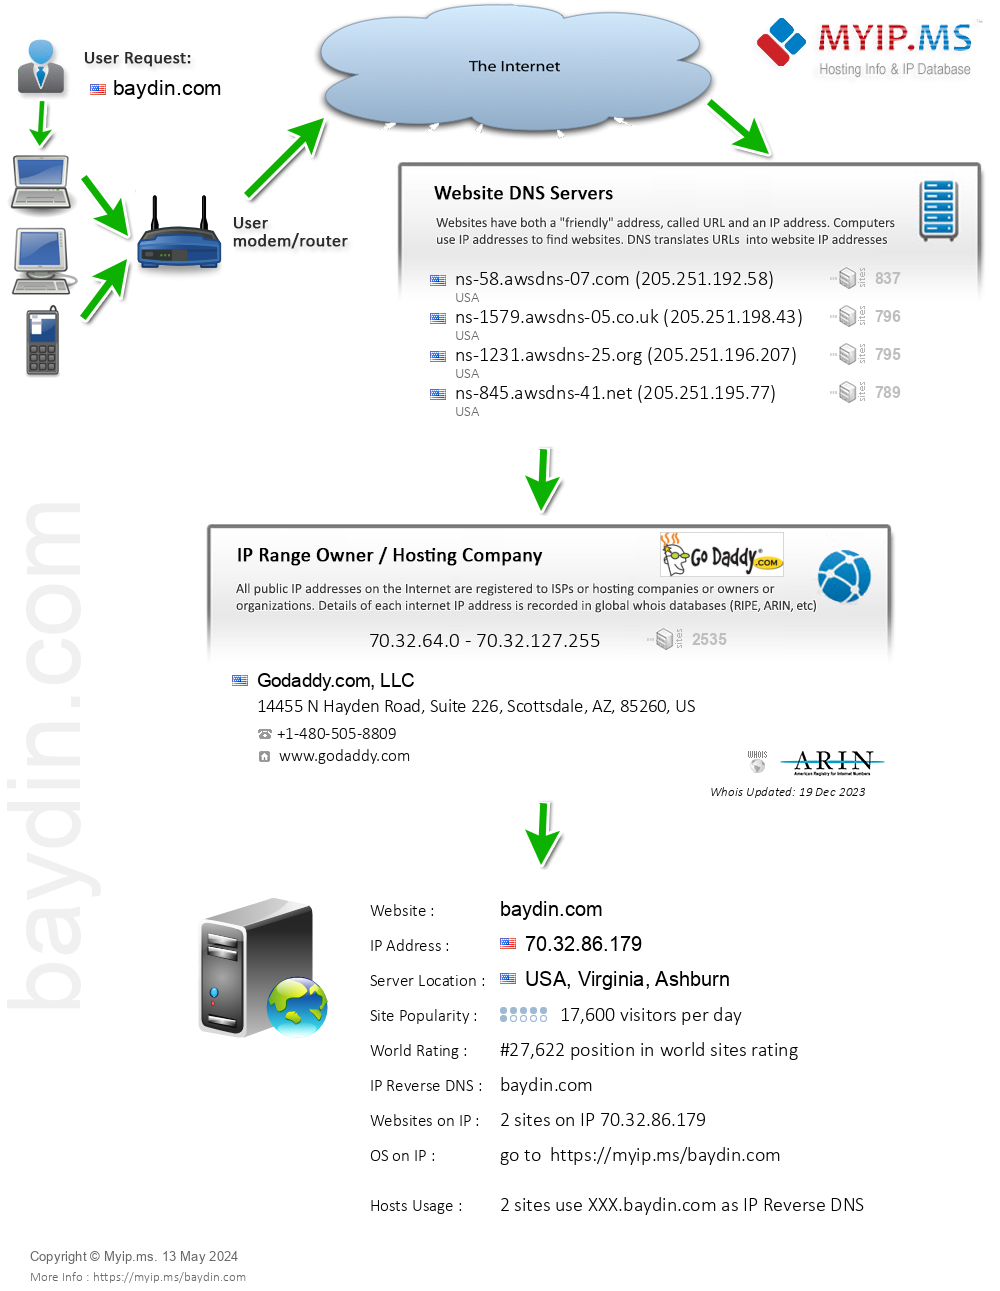 Baydin.com - Website Hosting Visual IP Diagram